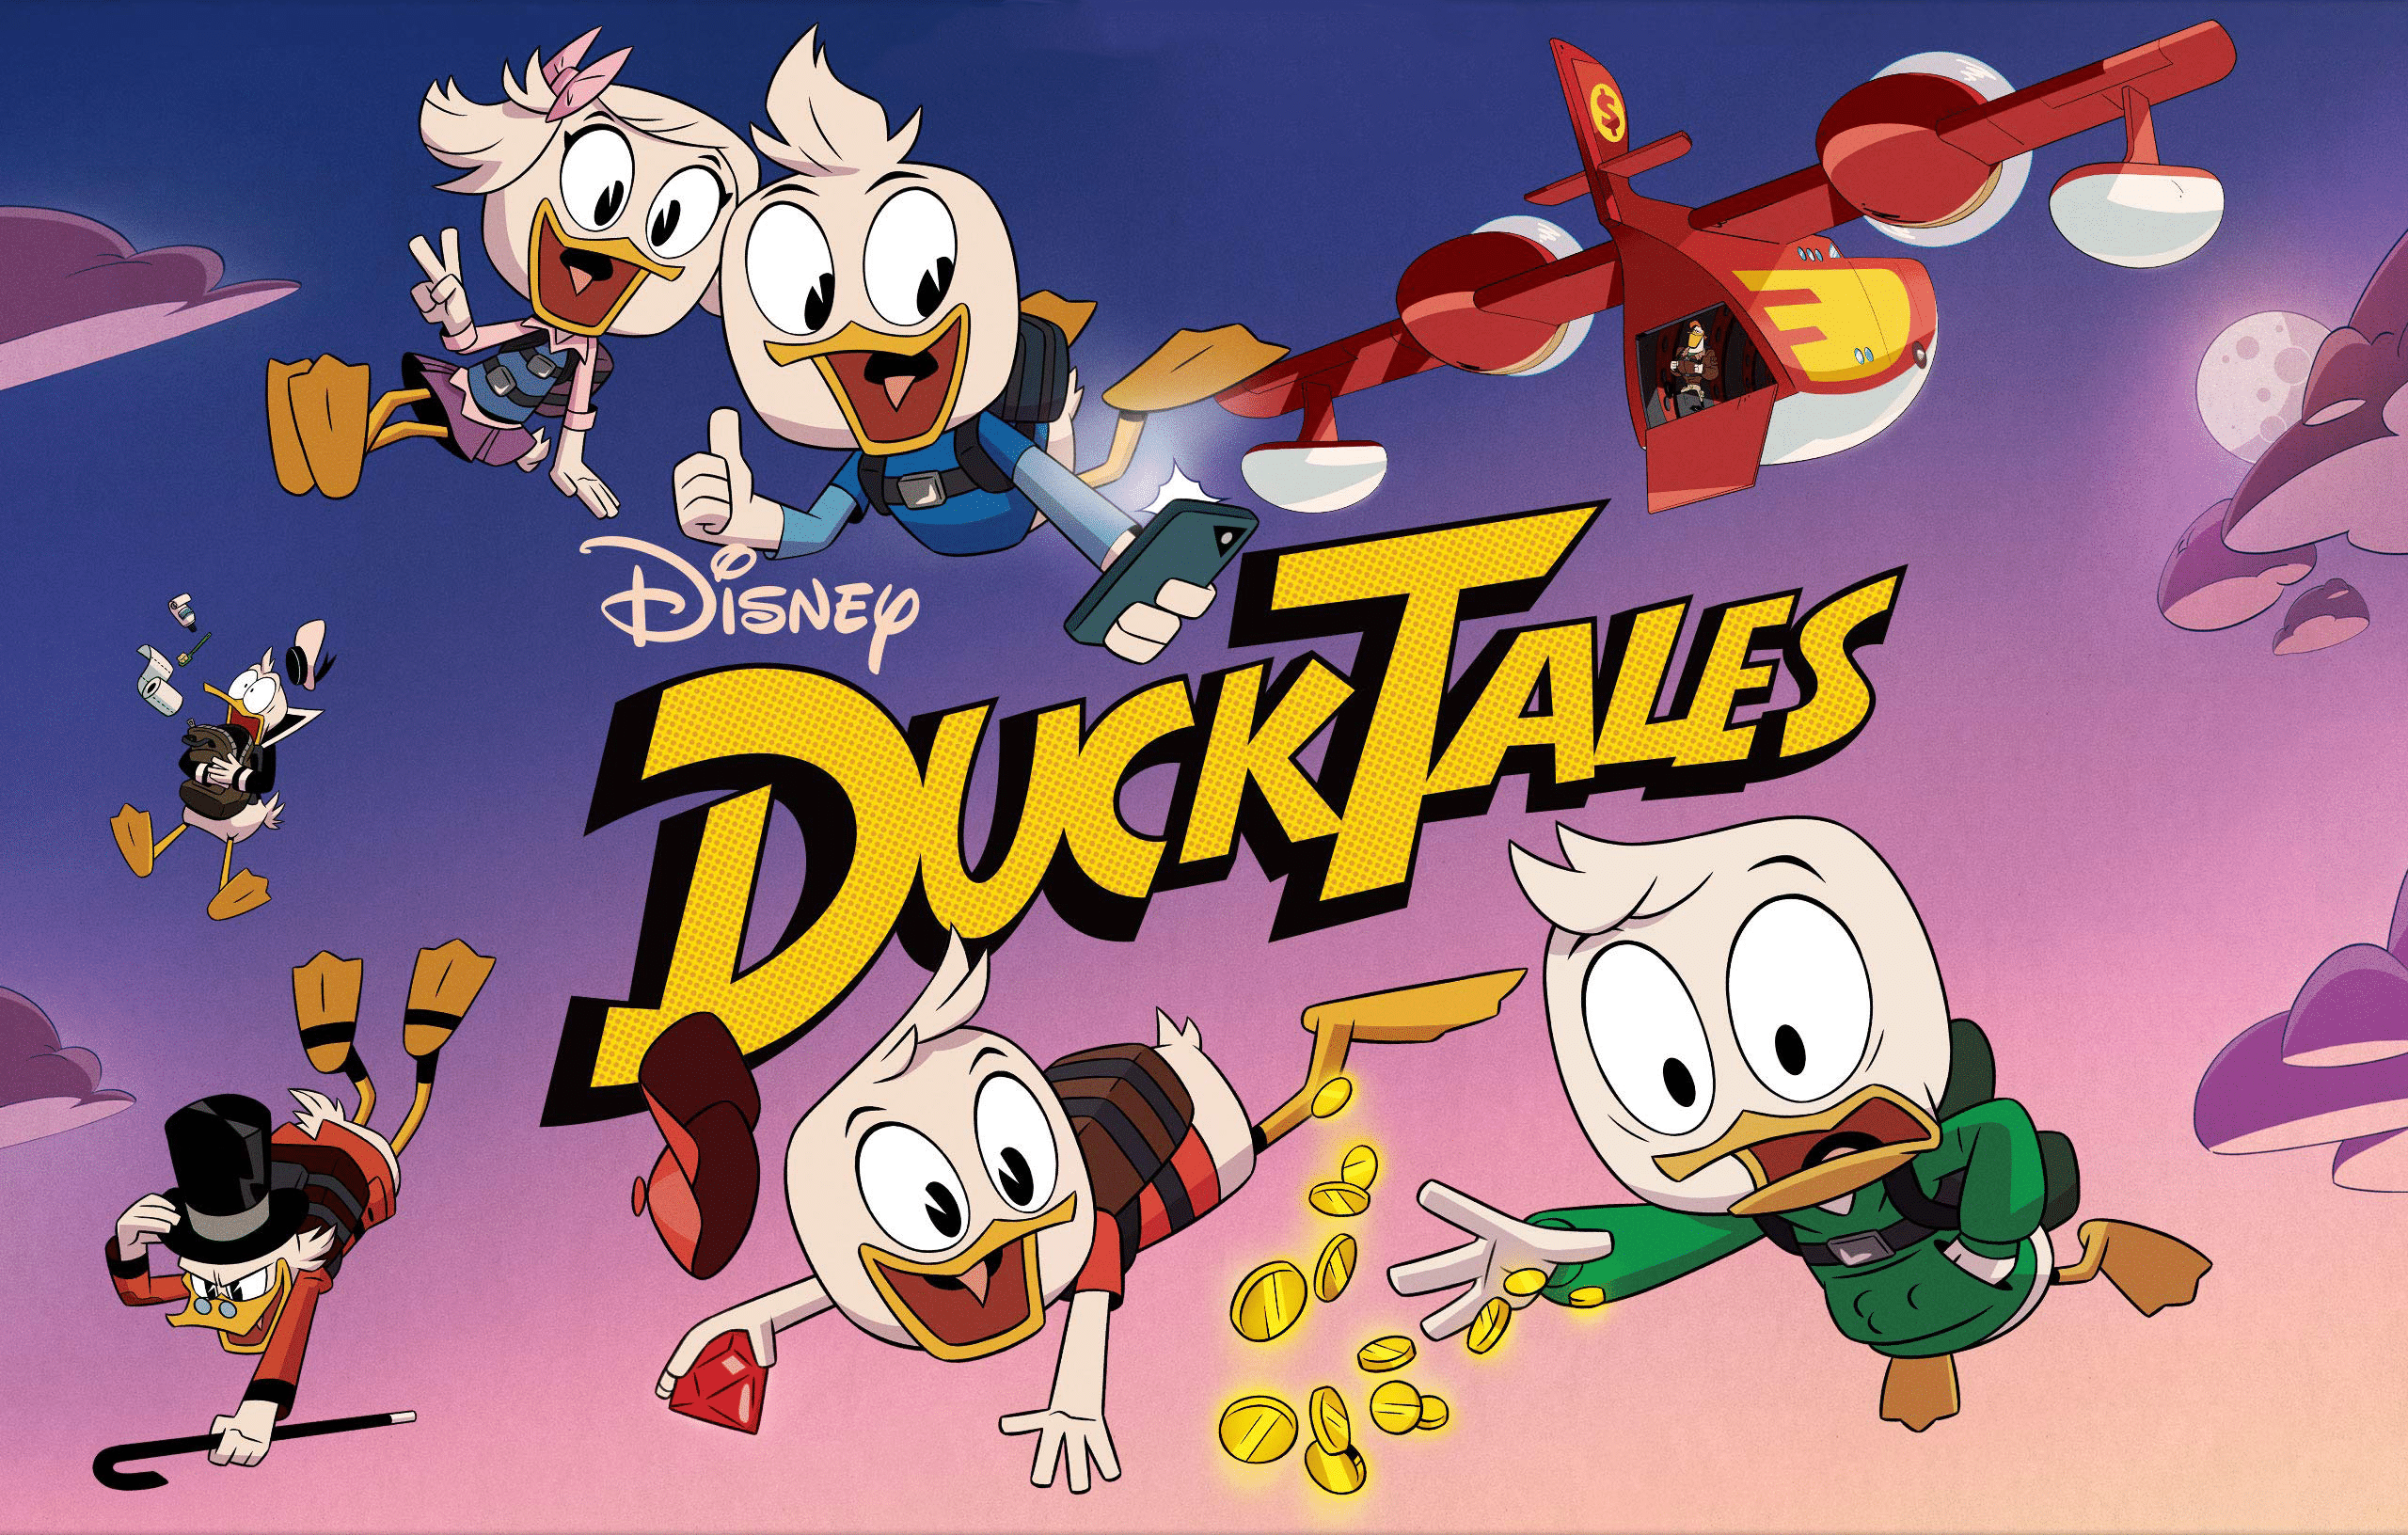 Il reboot di Ducktales, serie Disney di culto, è ormai giunta alle battute finali